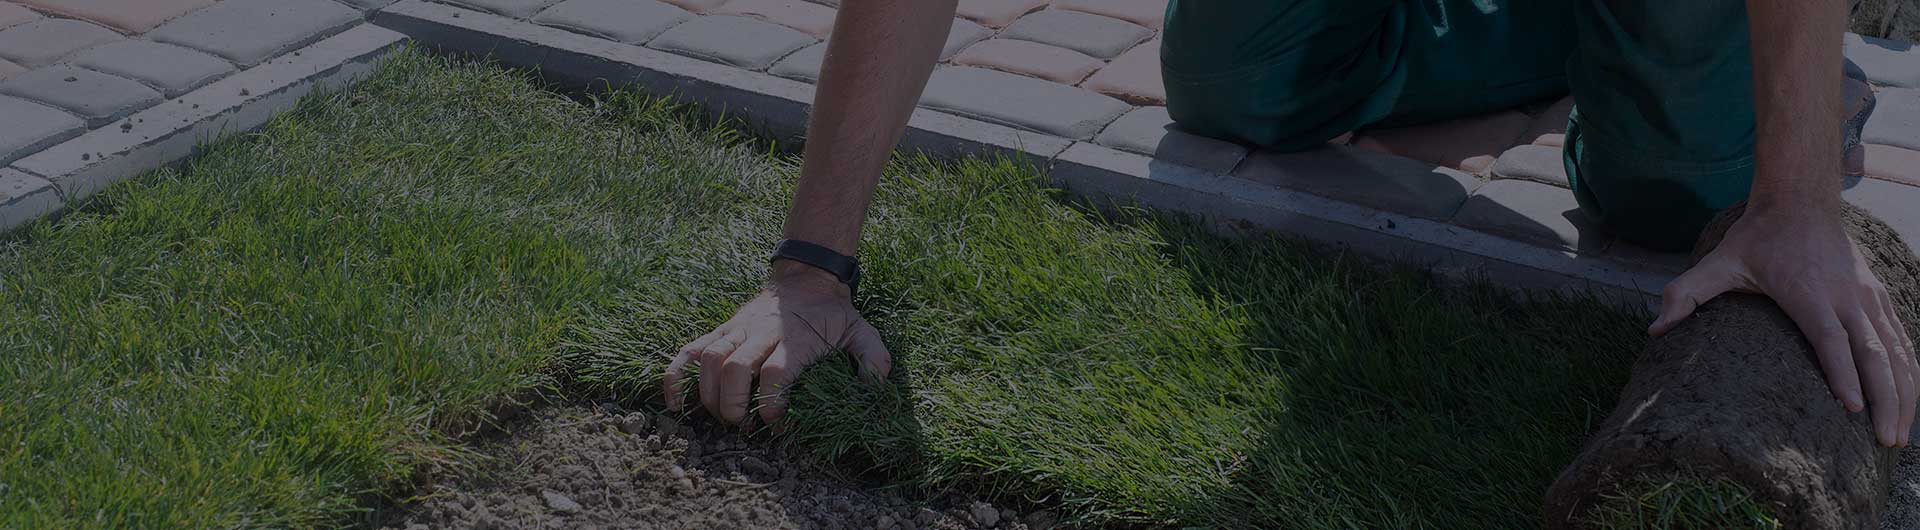 Landscaper installing turf into a yard.